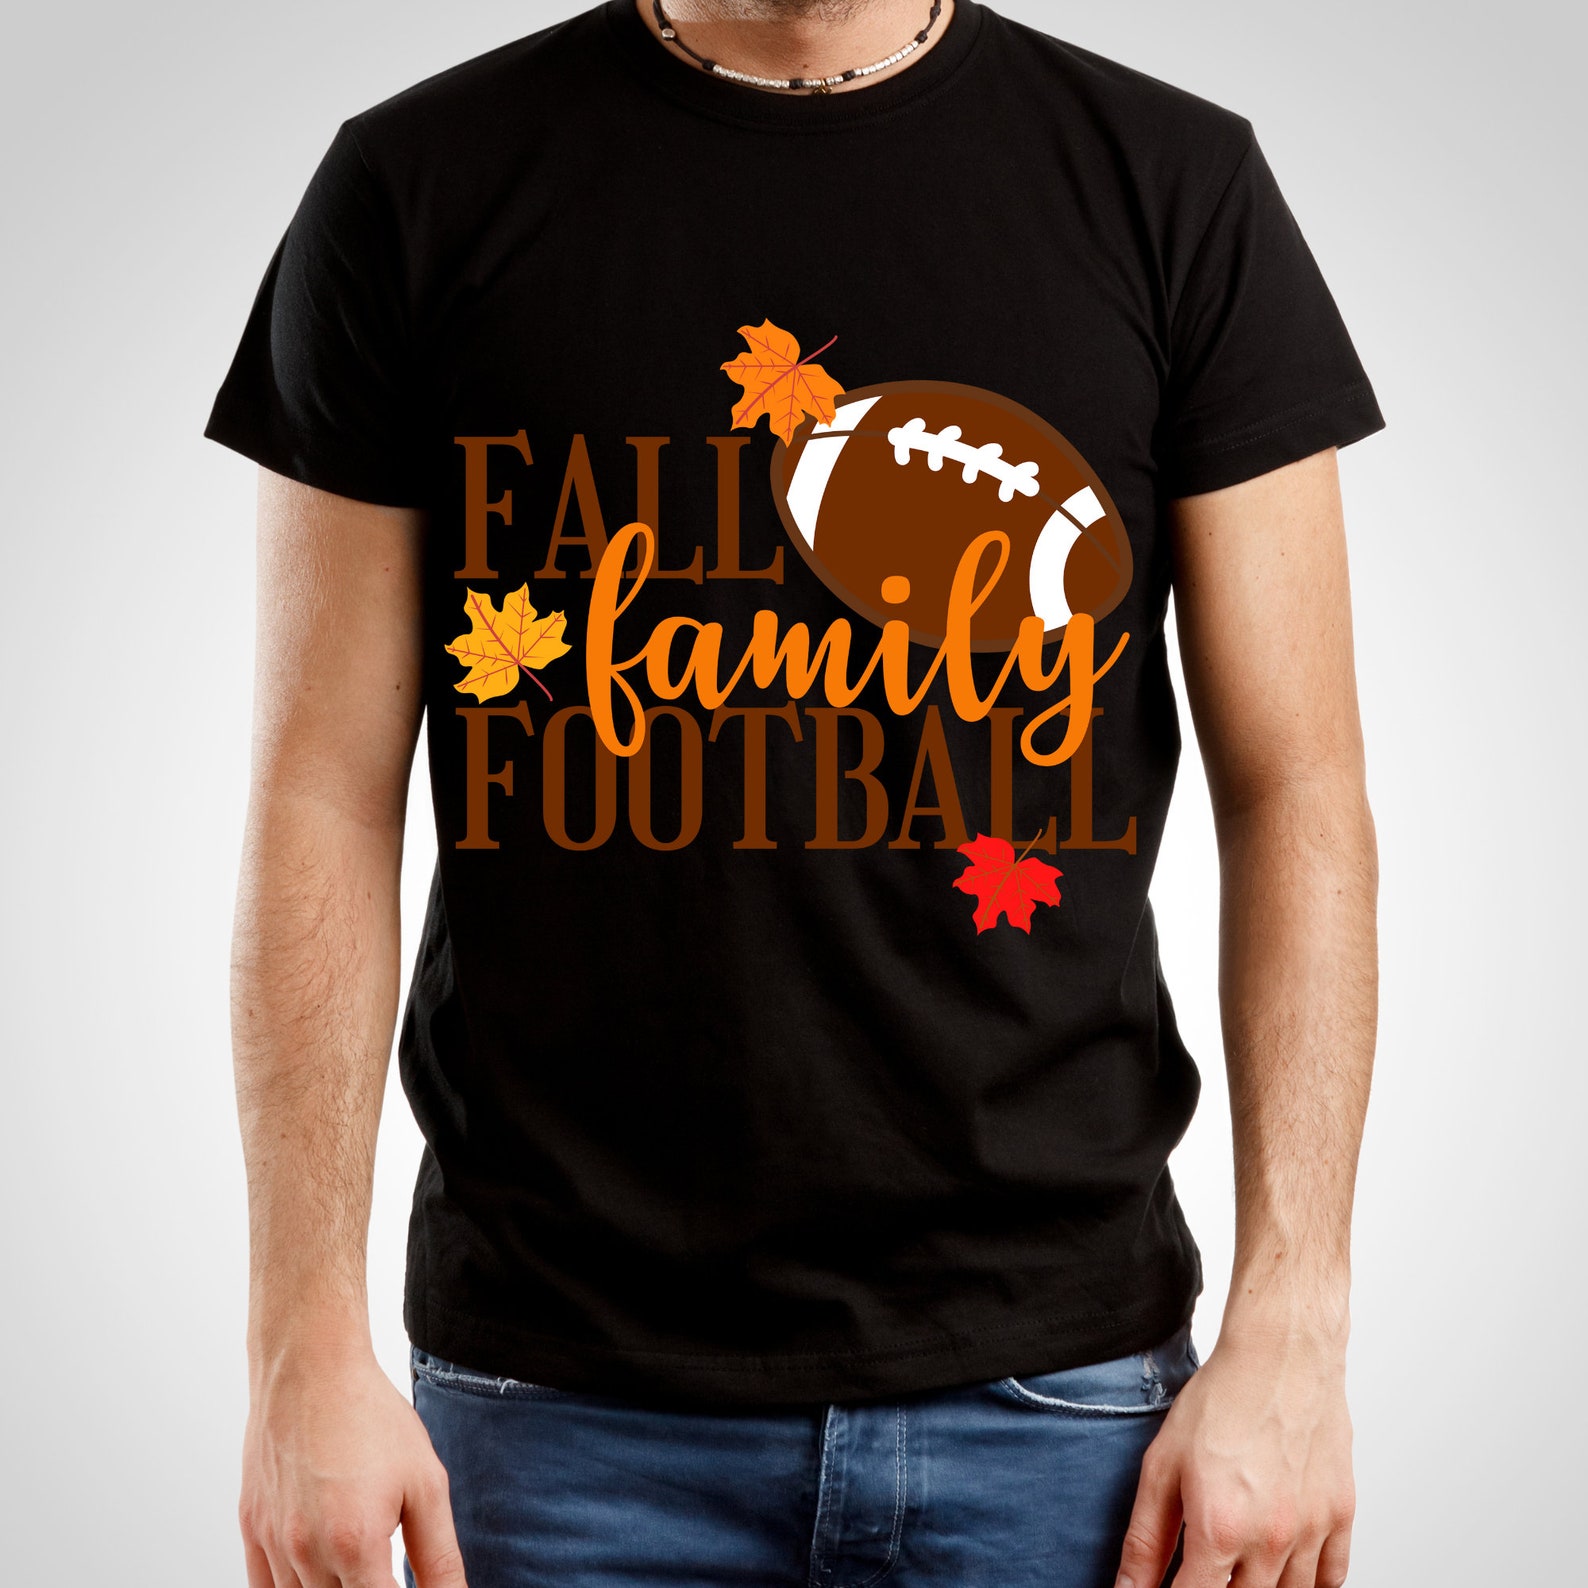 Fall Family Football SVG Football Shirt Fall Sweatshirt - Etsy